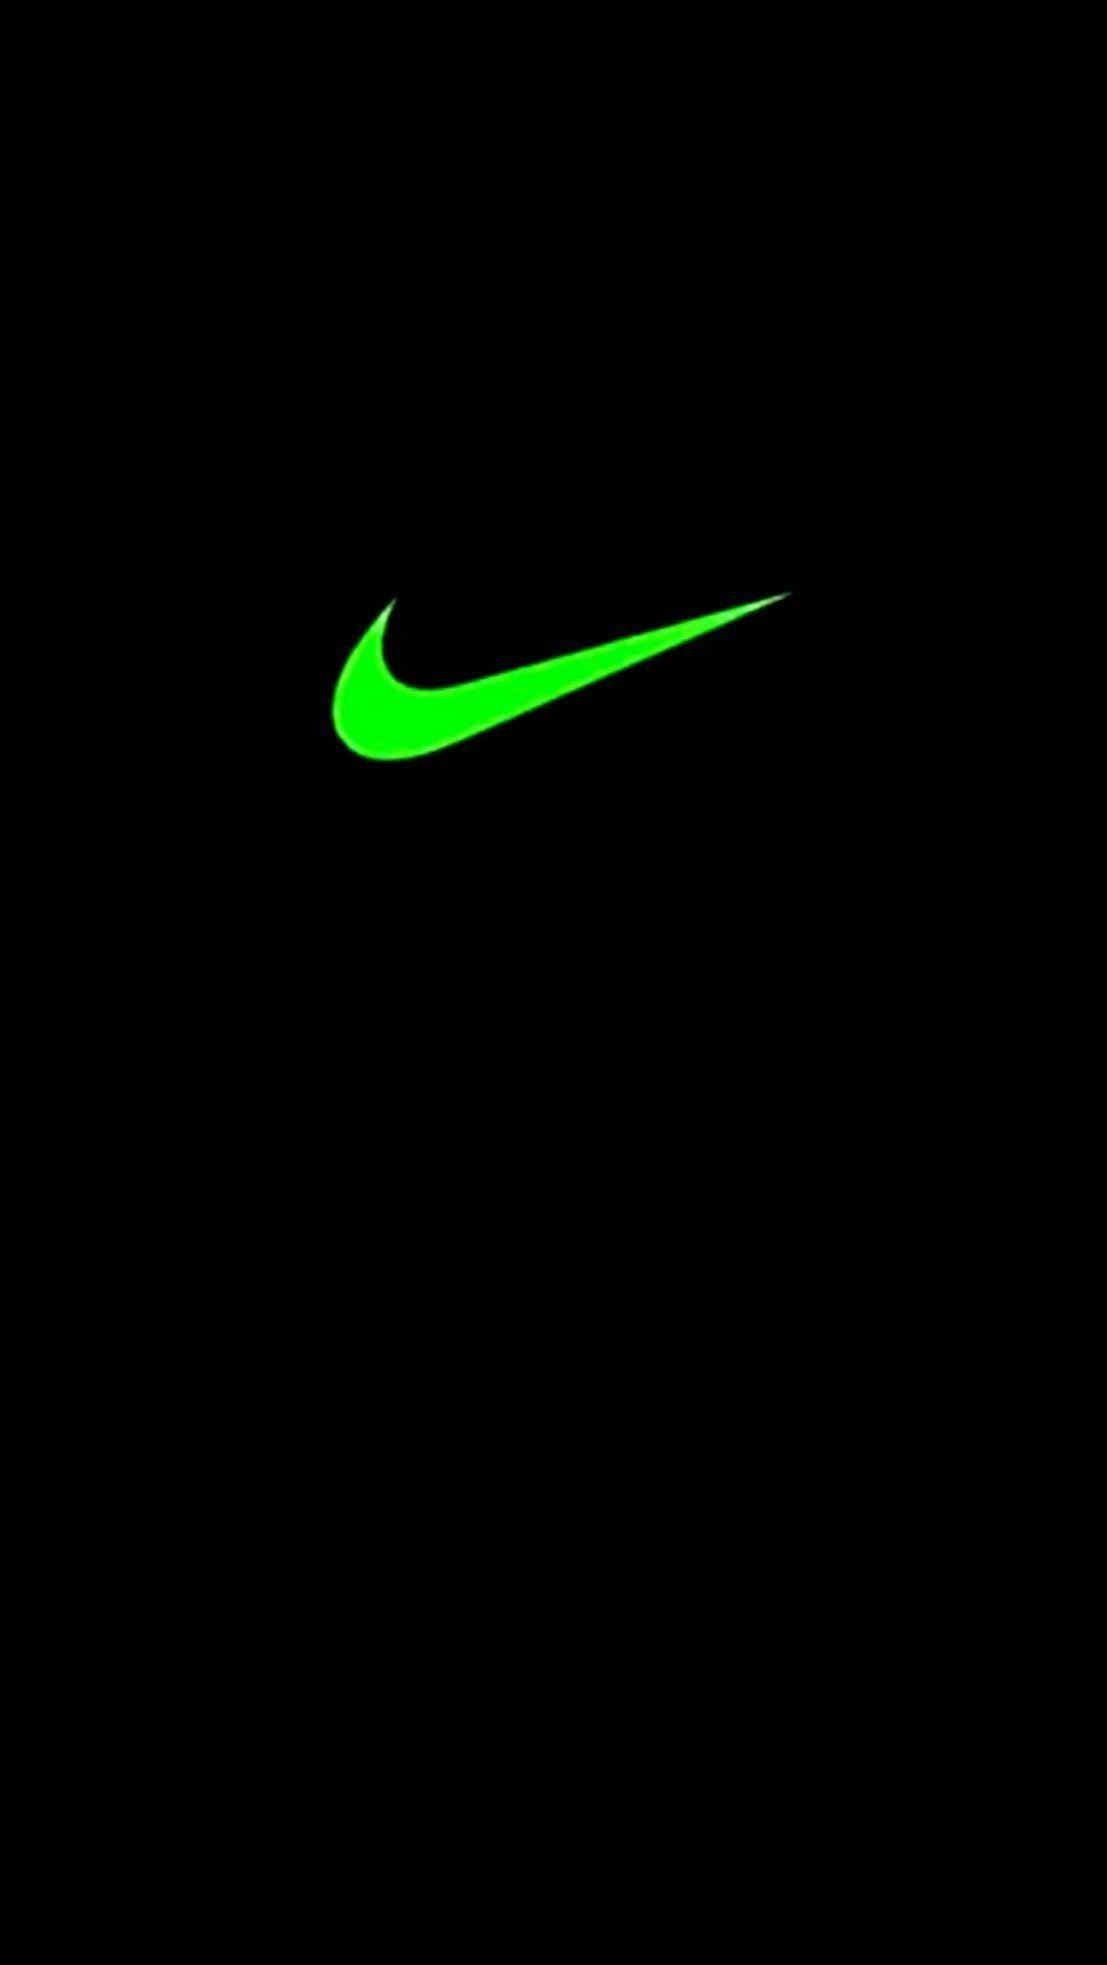 Neon Nike Wallpapers - Top Free Neon Nike Backgrounds ...